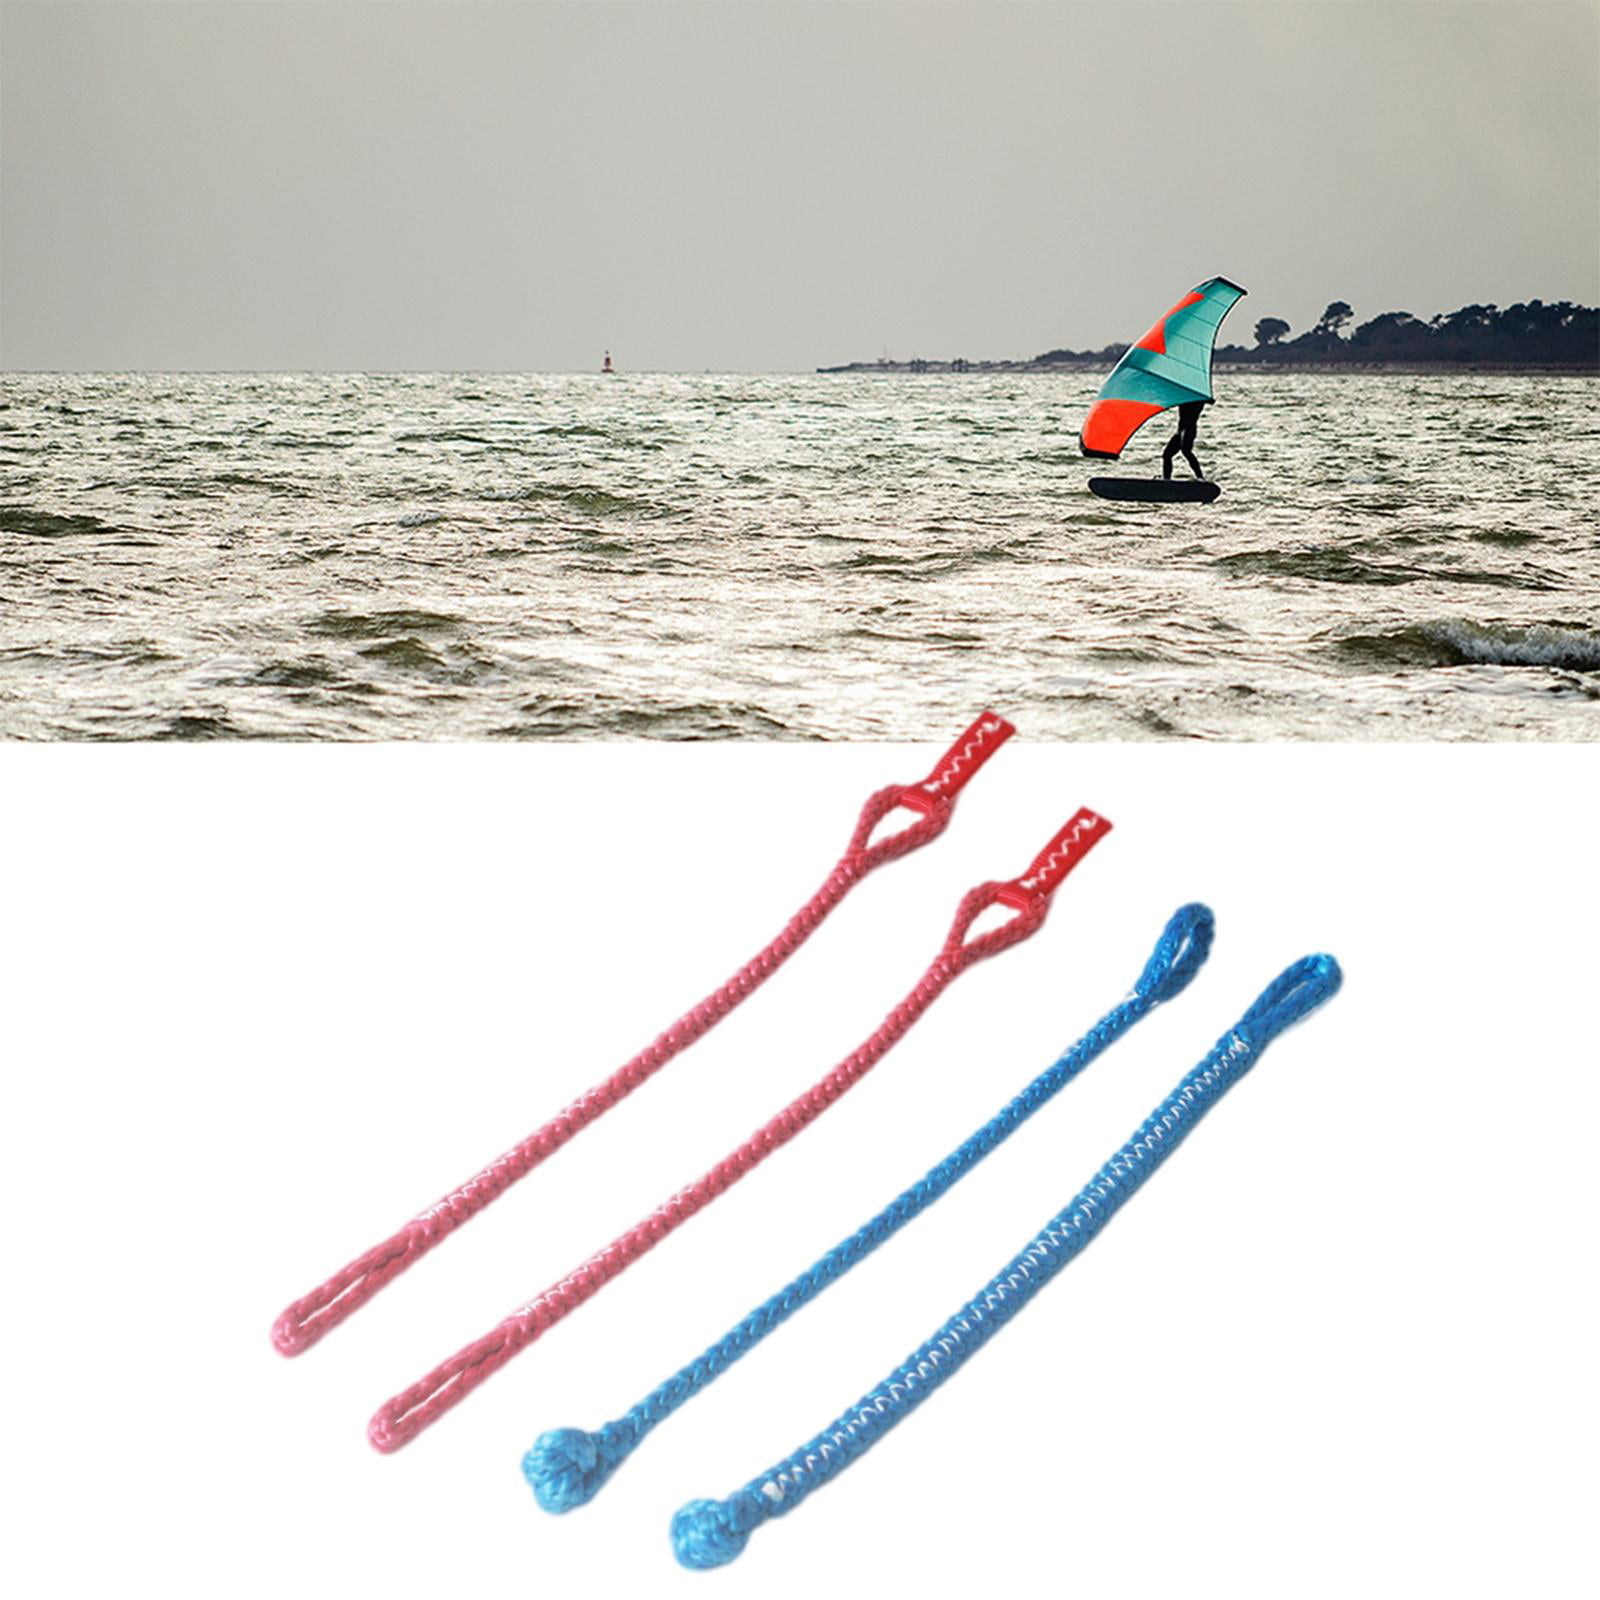 kite-surfing pigtails Pigtail x 2pcs kite line pigtails 